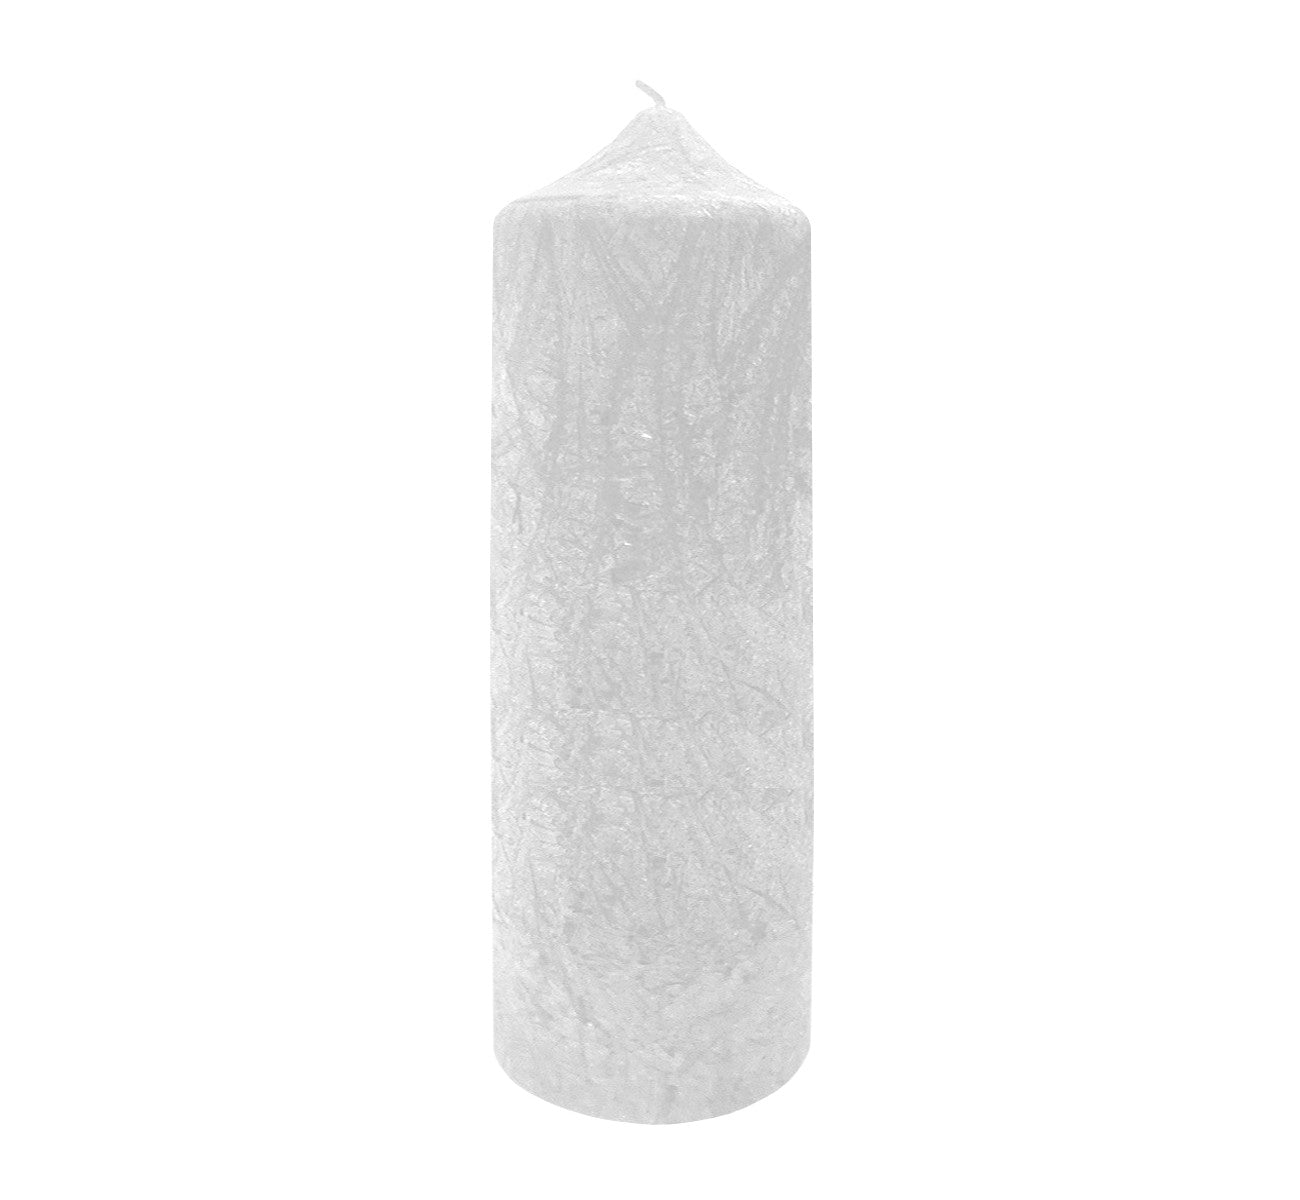 White tall pillar candle, long burn time 80 hour, vegan stearin, height 21 cm 8.27”, diameter 7 cm 2.76”, handmade Scandinavia.